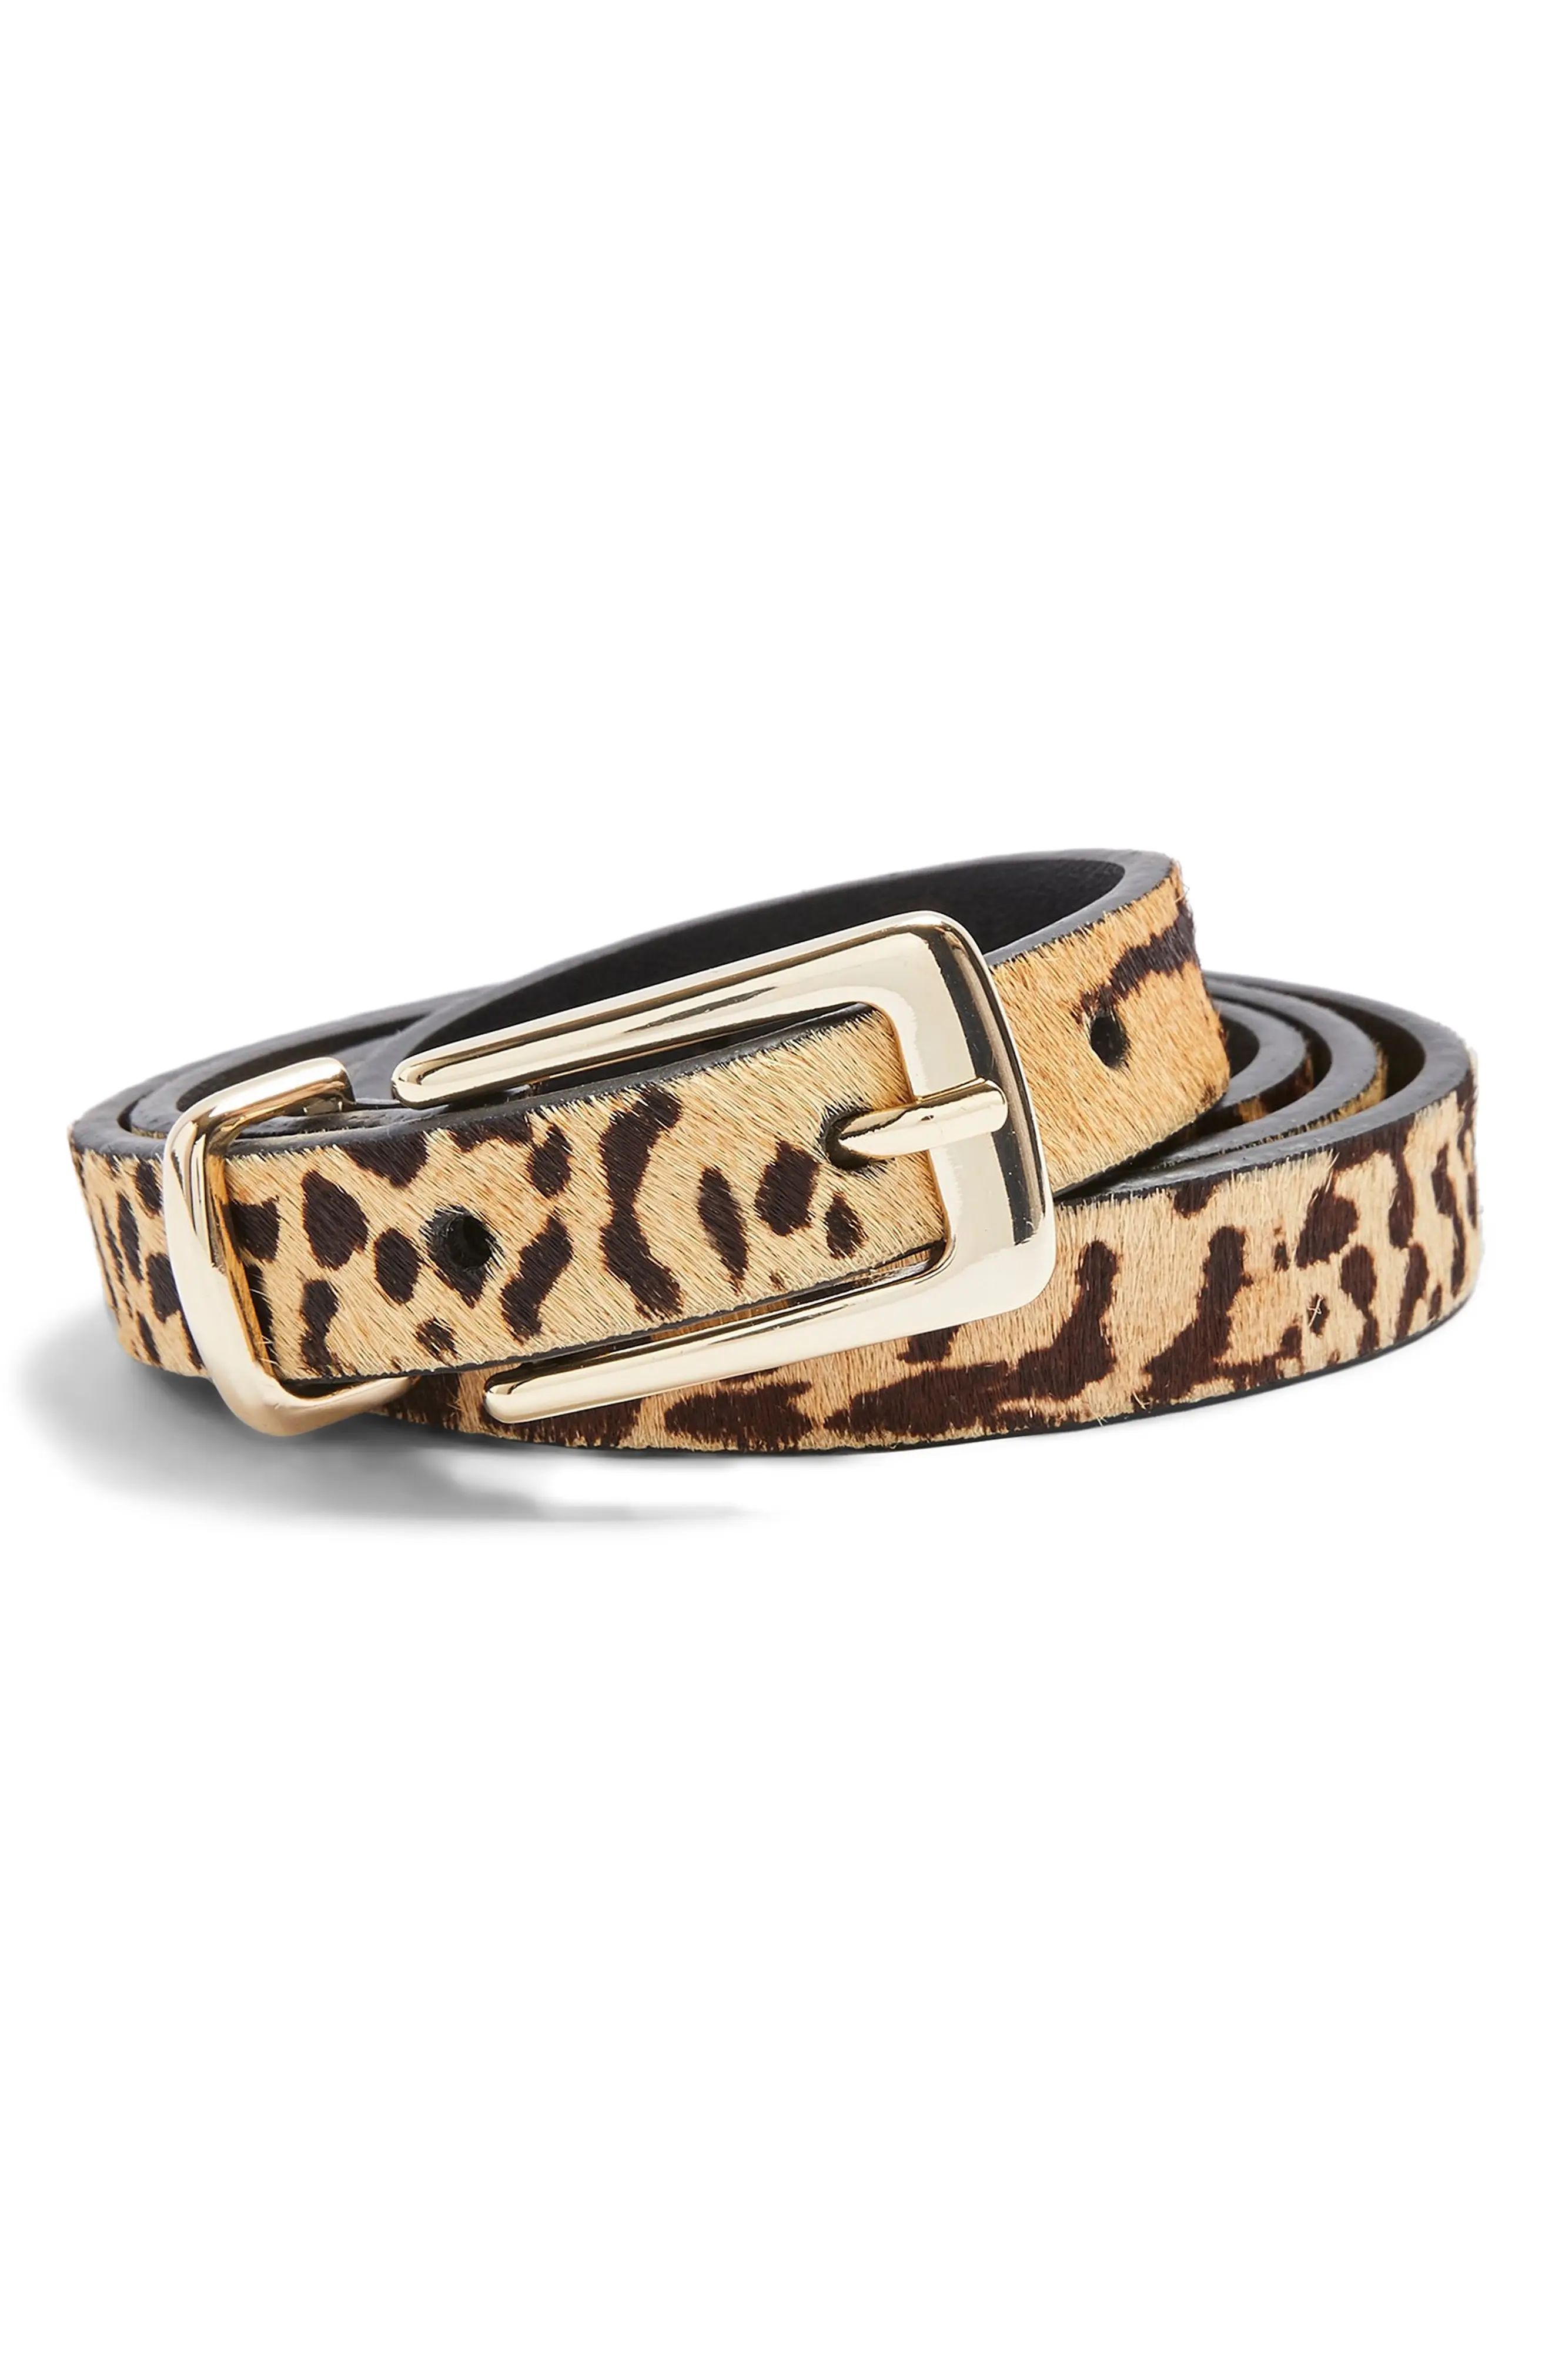 Women's Topshop Tiger Print Calf Hair Skinny Belt, Size Medium/Large - Leopard | Nordstrom